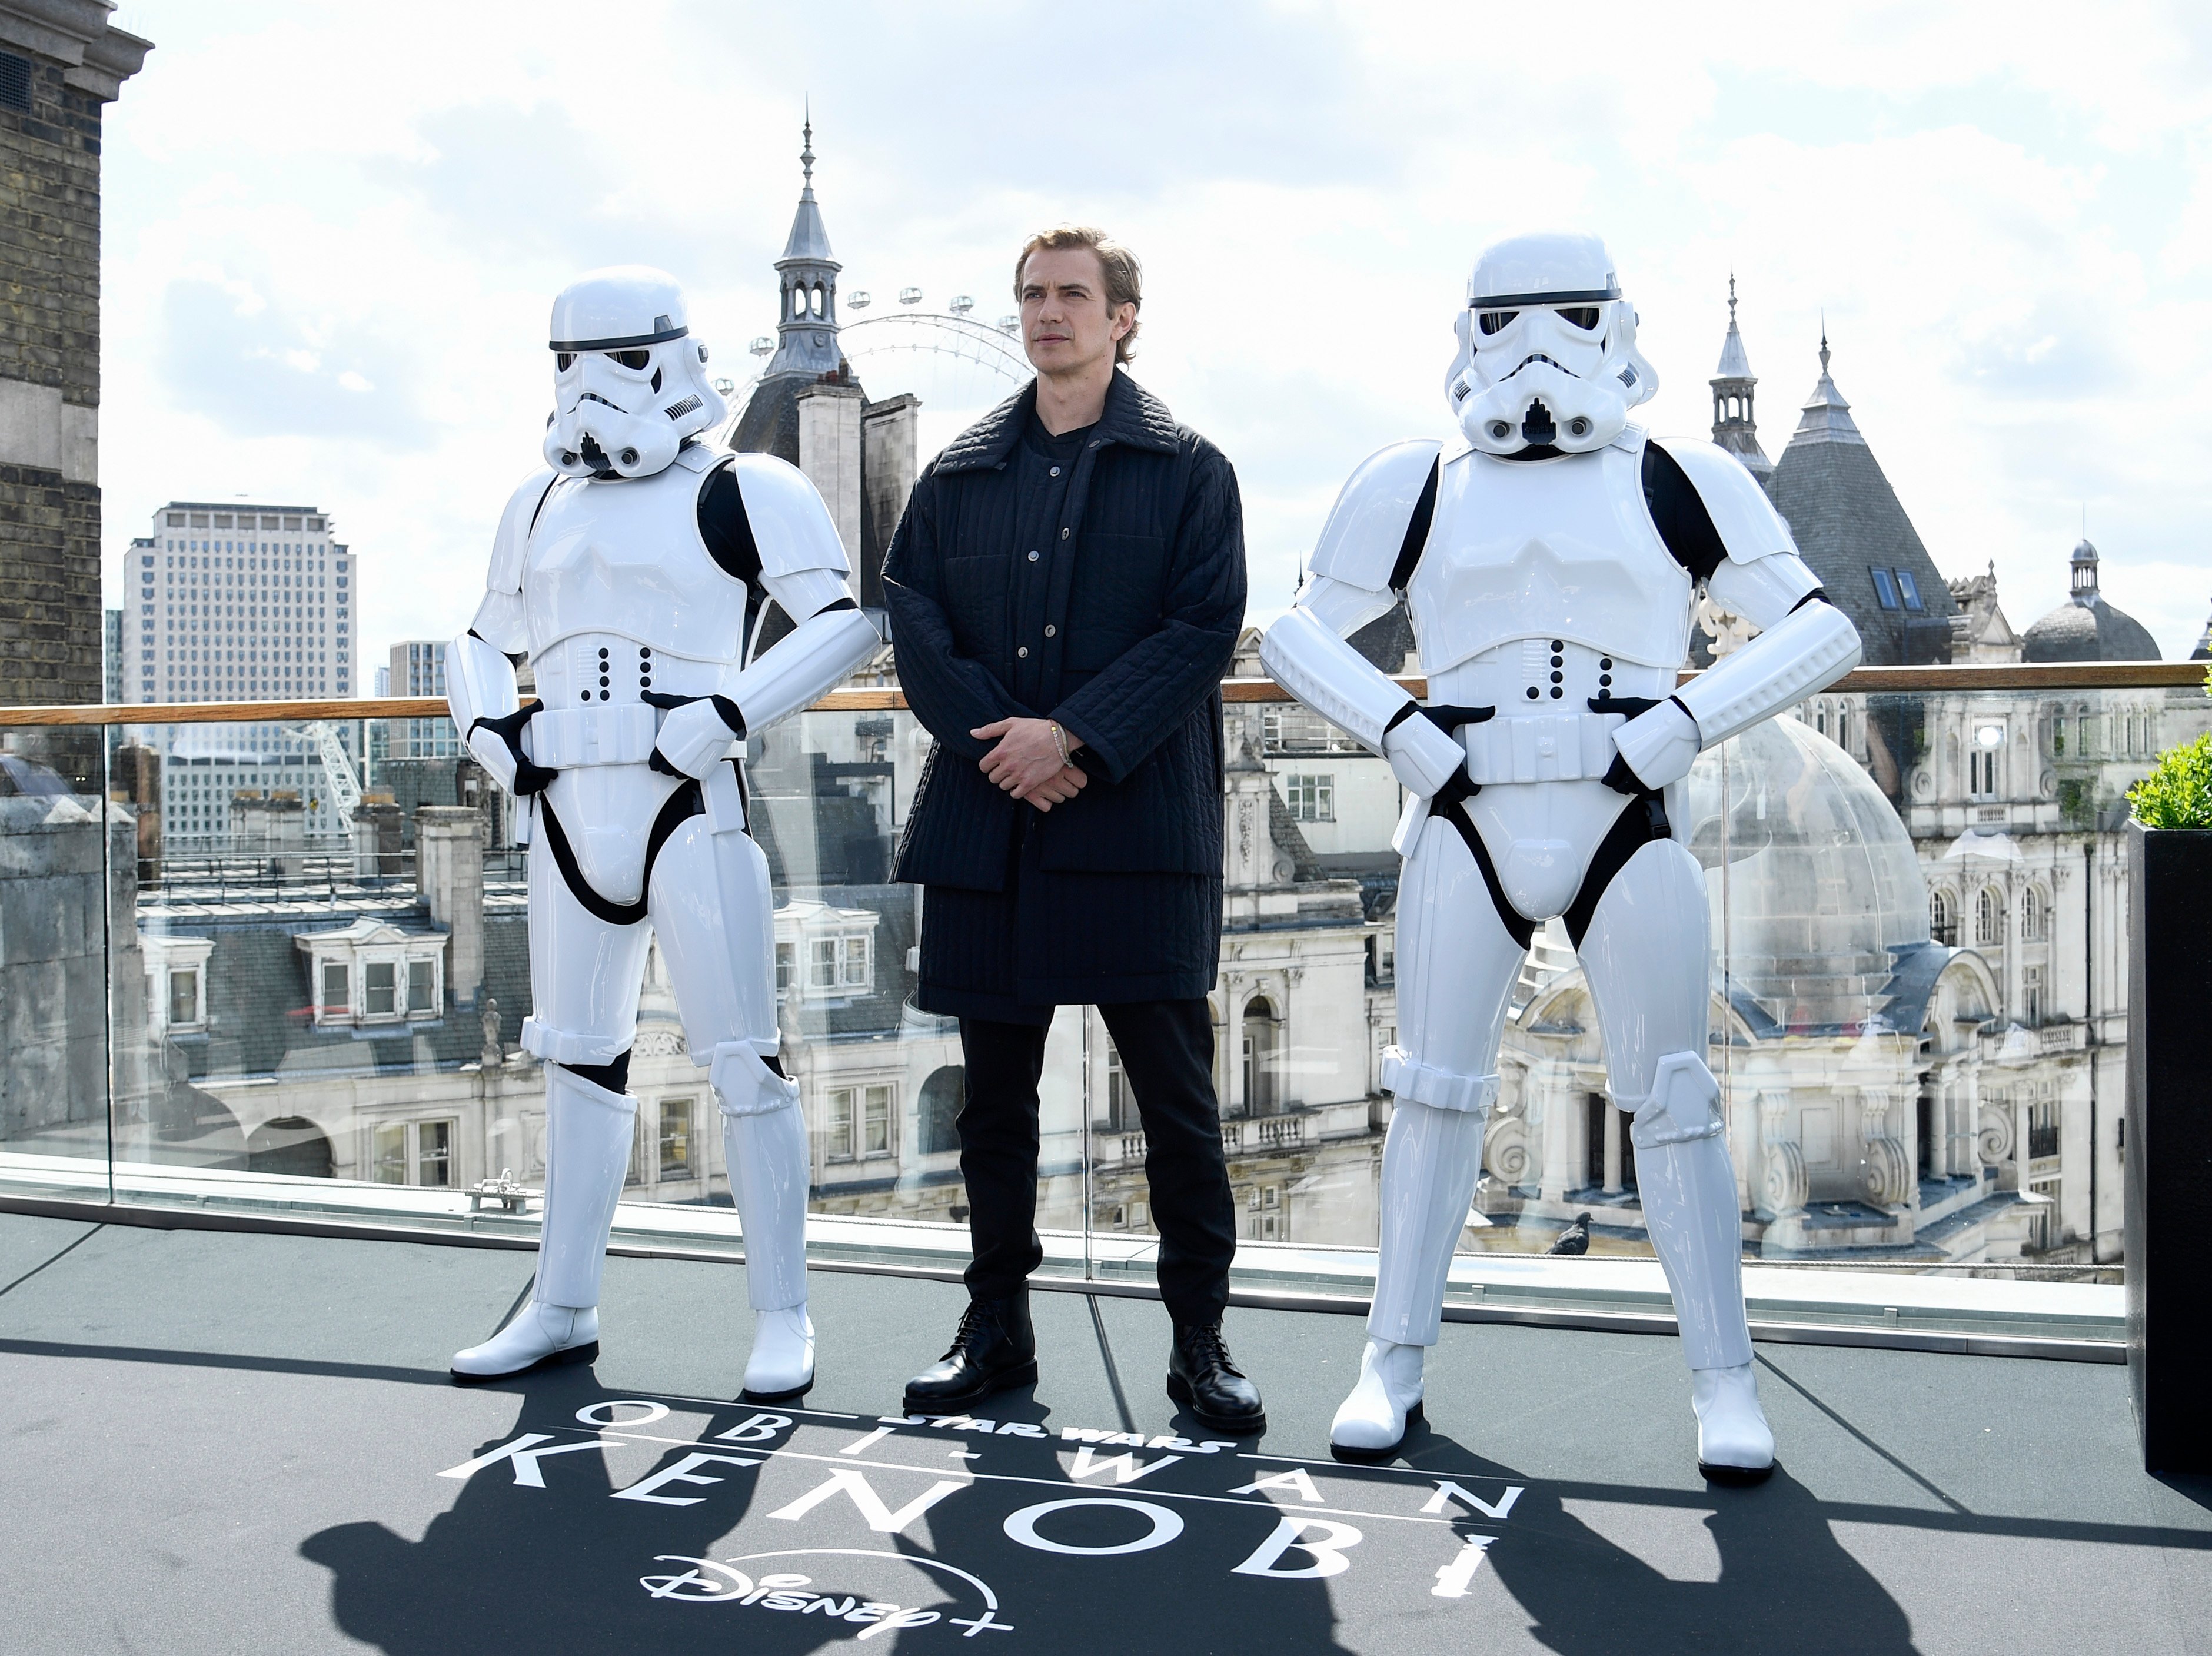 Star Wars actor Hayden Christensen, who plays Anakin Skywalker, attends a photocall for Obi-Wan Kenobi on Disney+